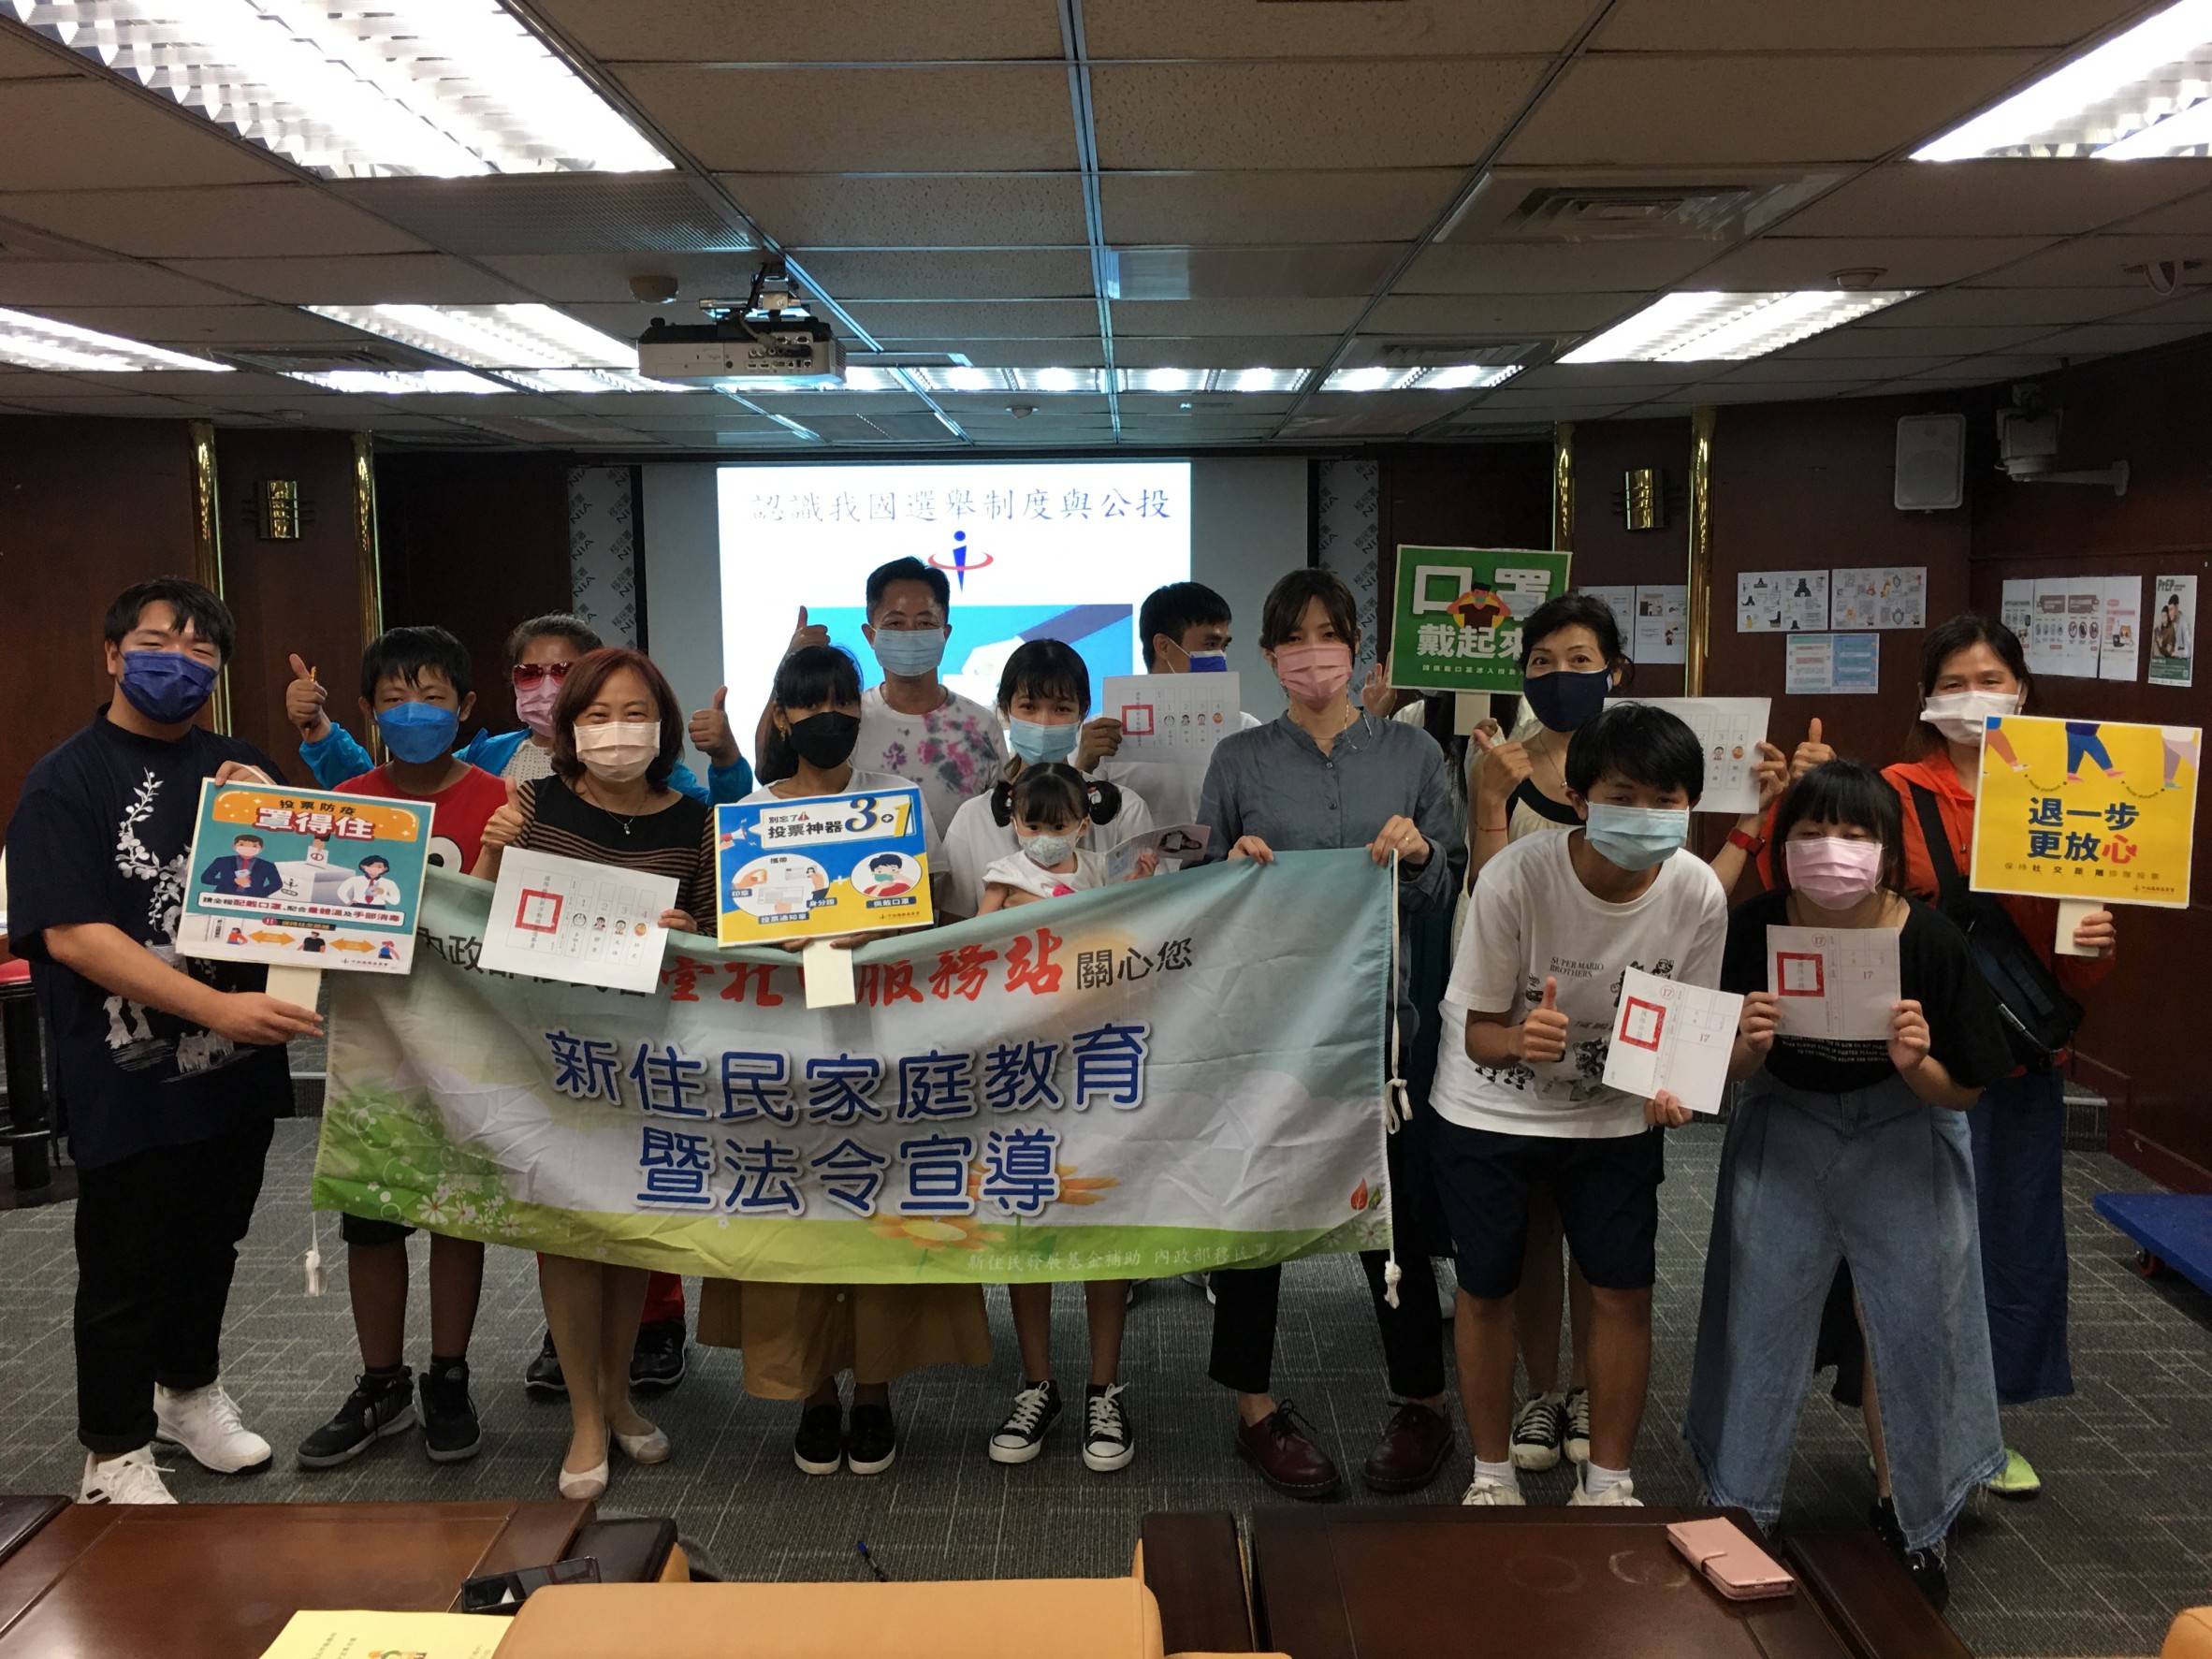 Kantor Layanan Imigrasi Kota Taipei menyelenggarakan kegiatan pendidikan keluarga bagi penduduk baru terkait prosedur dan pelaksanaan referendum. Sumber: Kantor Layanan Imigrasi Kota Taipei 